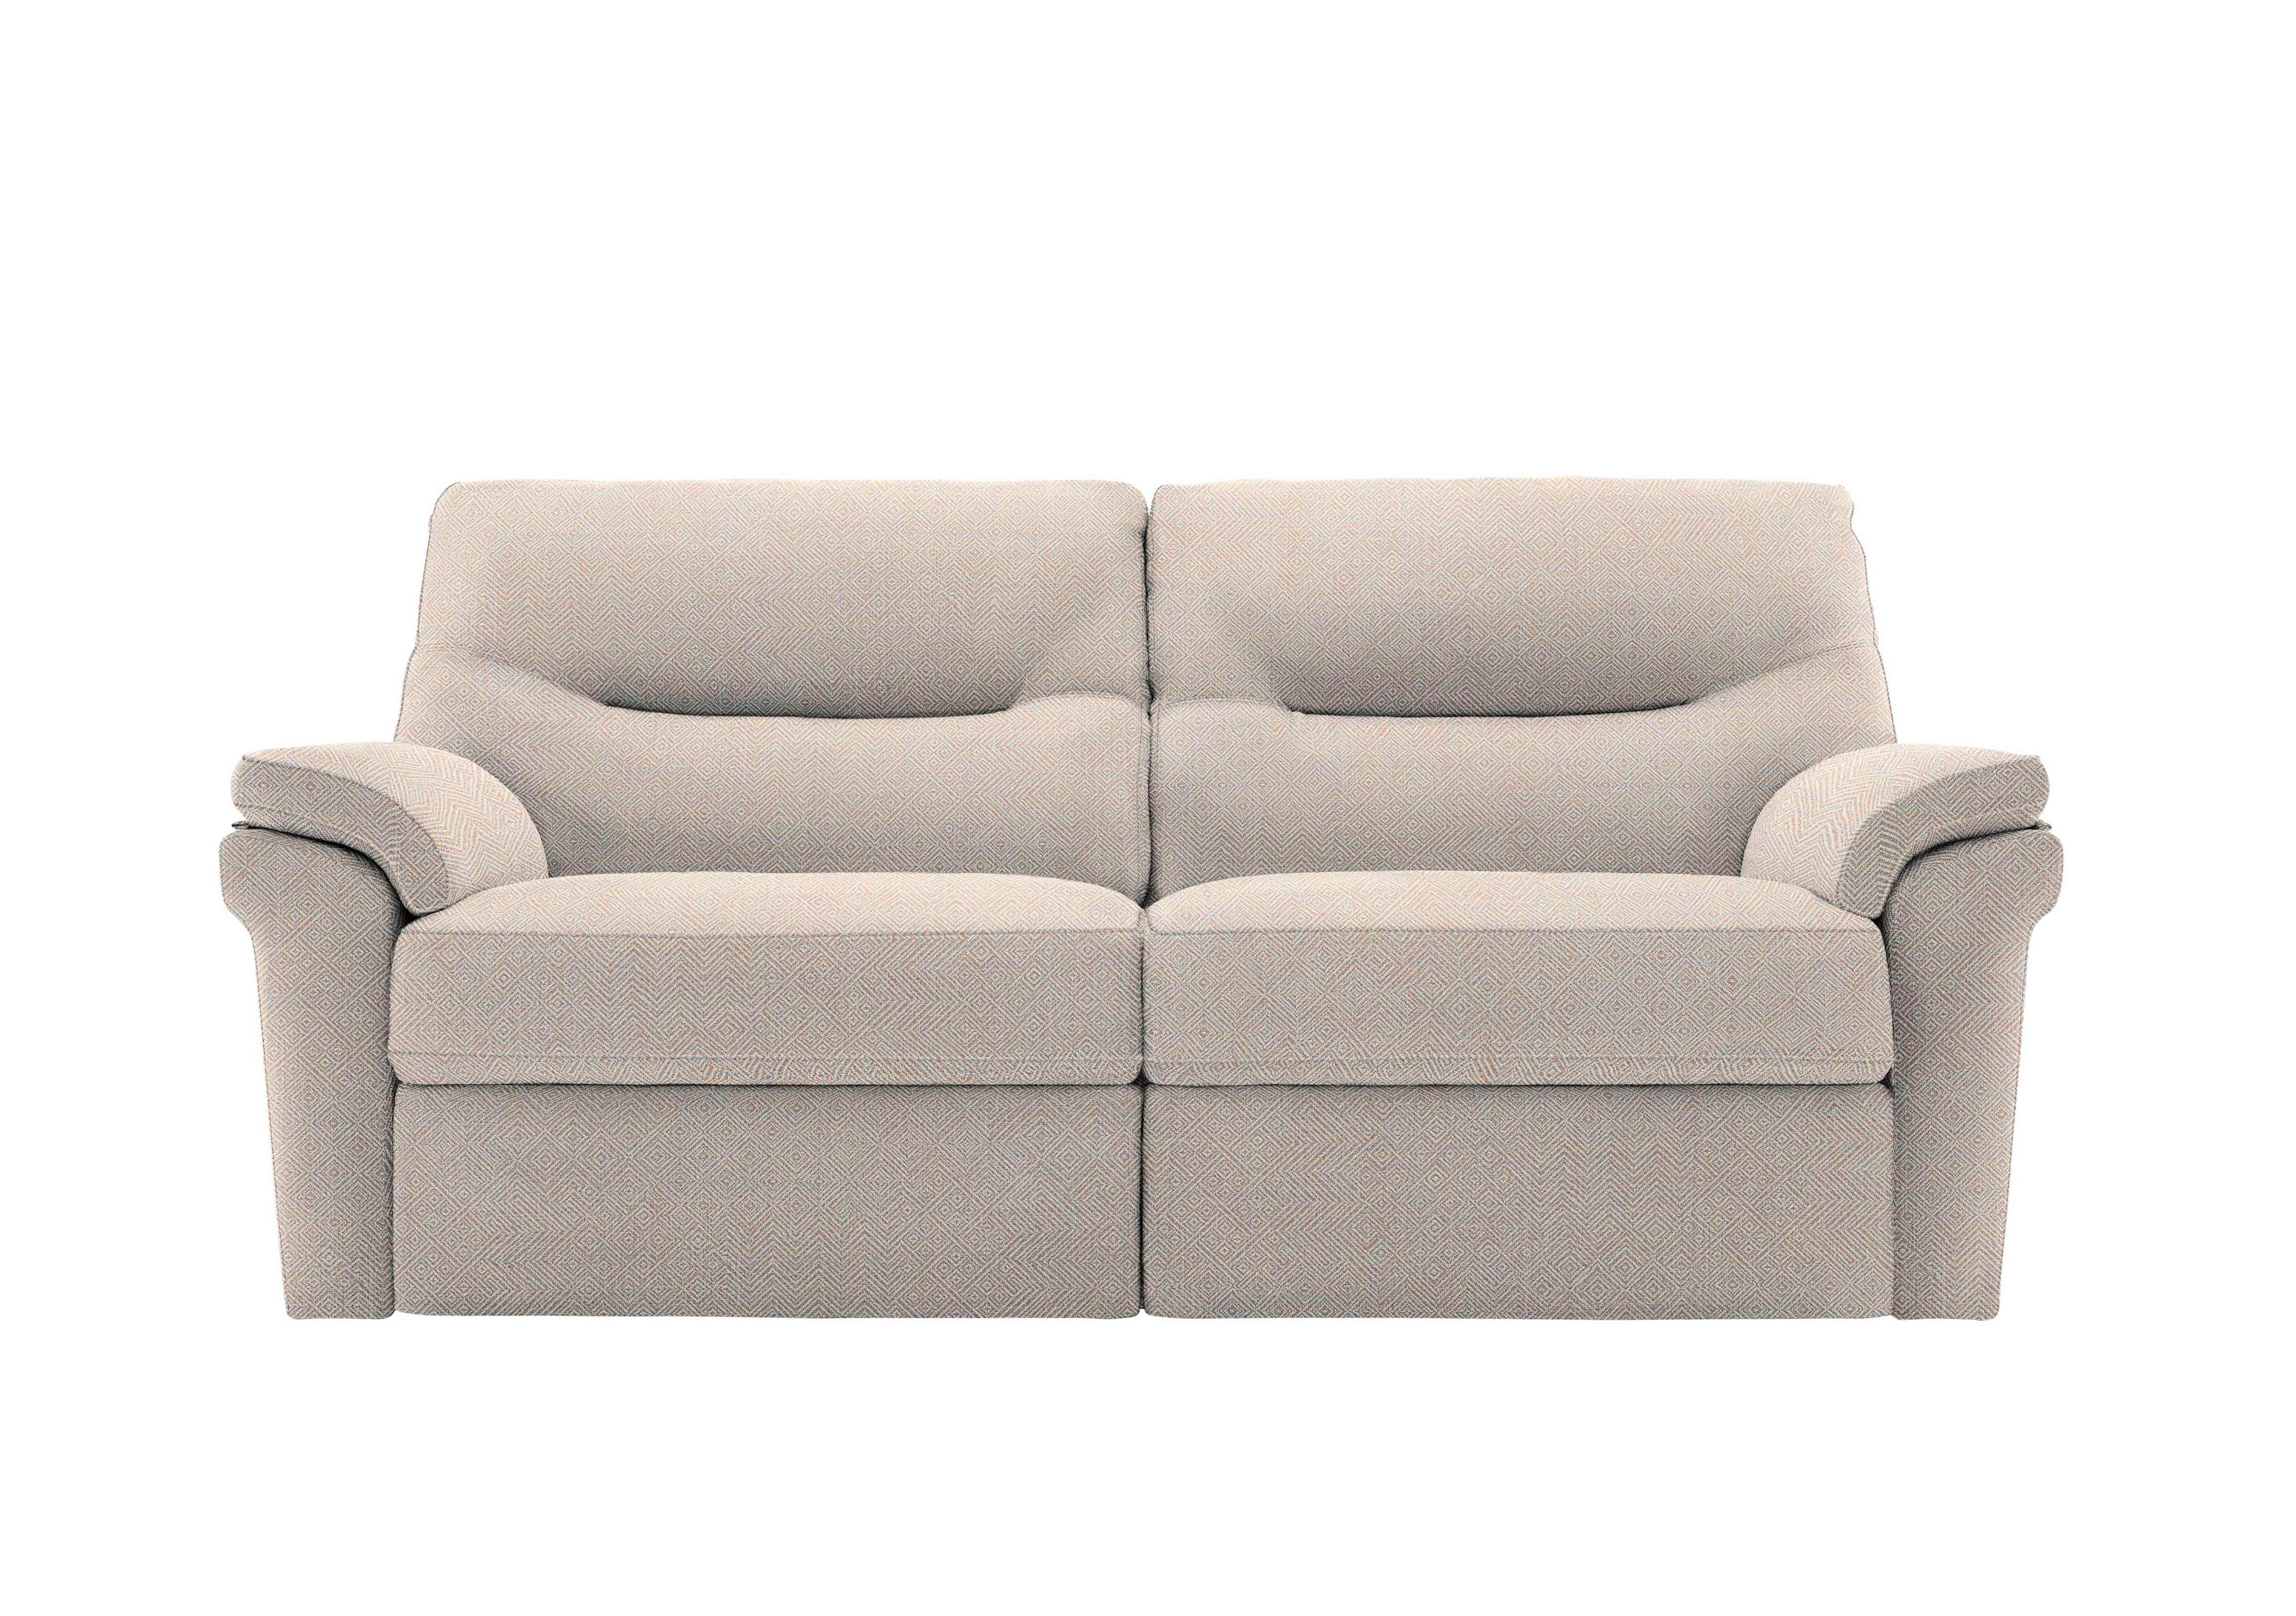 Seattle 3 Seater Fabric Power Recliner Sofa with Power Lumbar in B011 Nebular Blush on Furniture Village